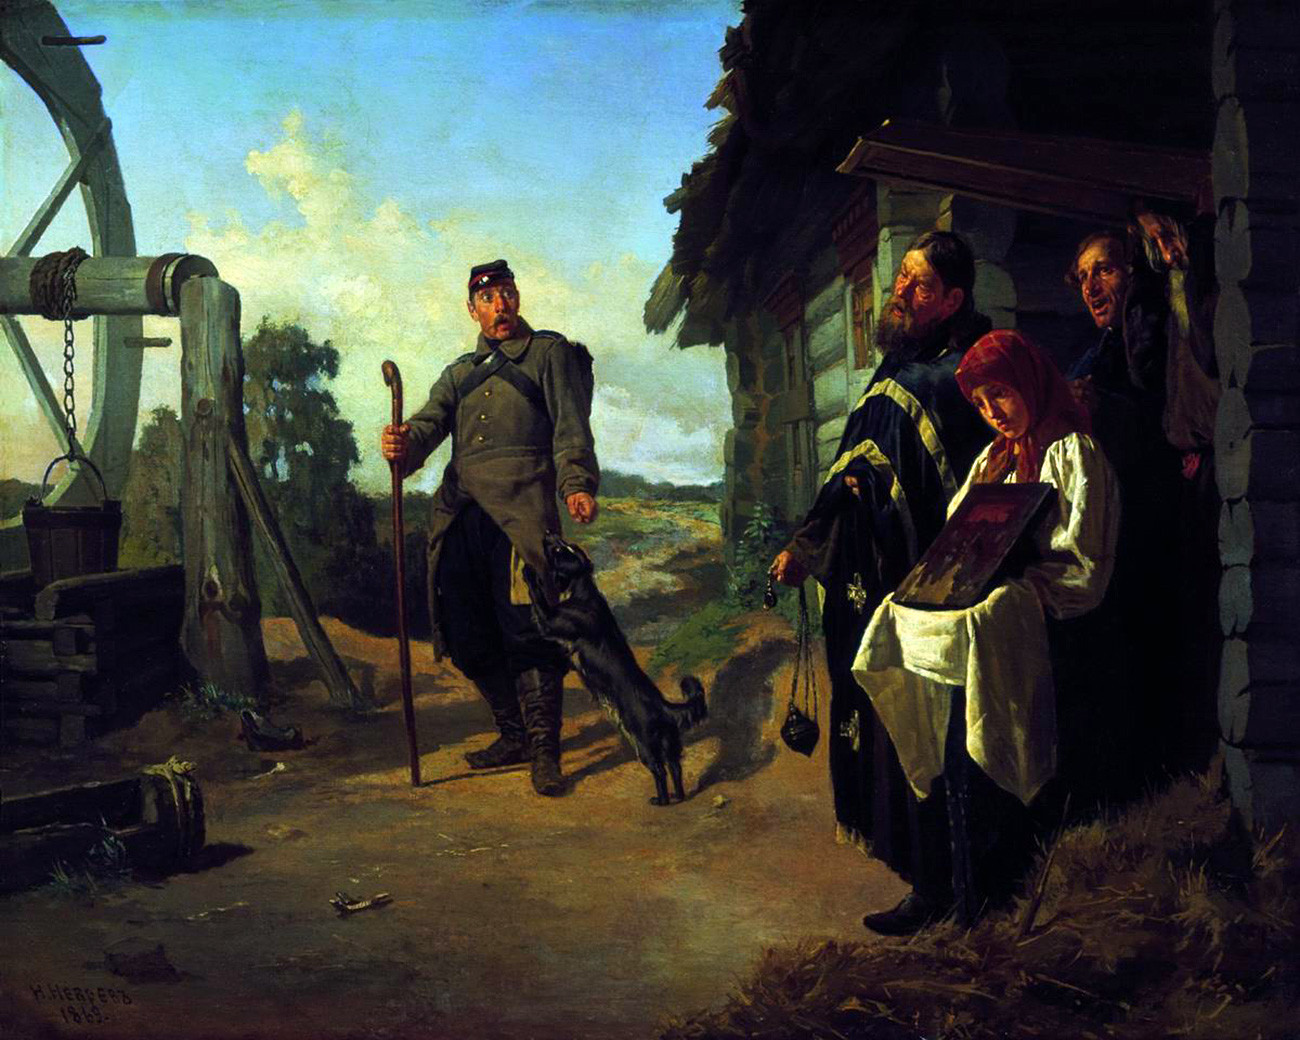 Regresso de soldado a sua pátria, 1869
